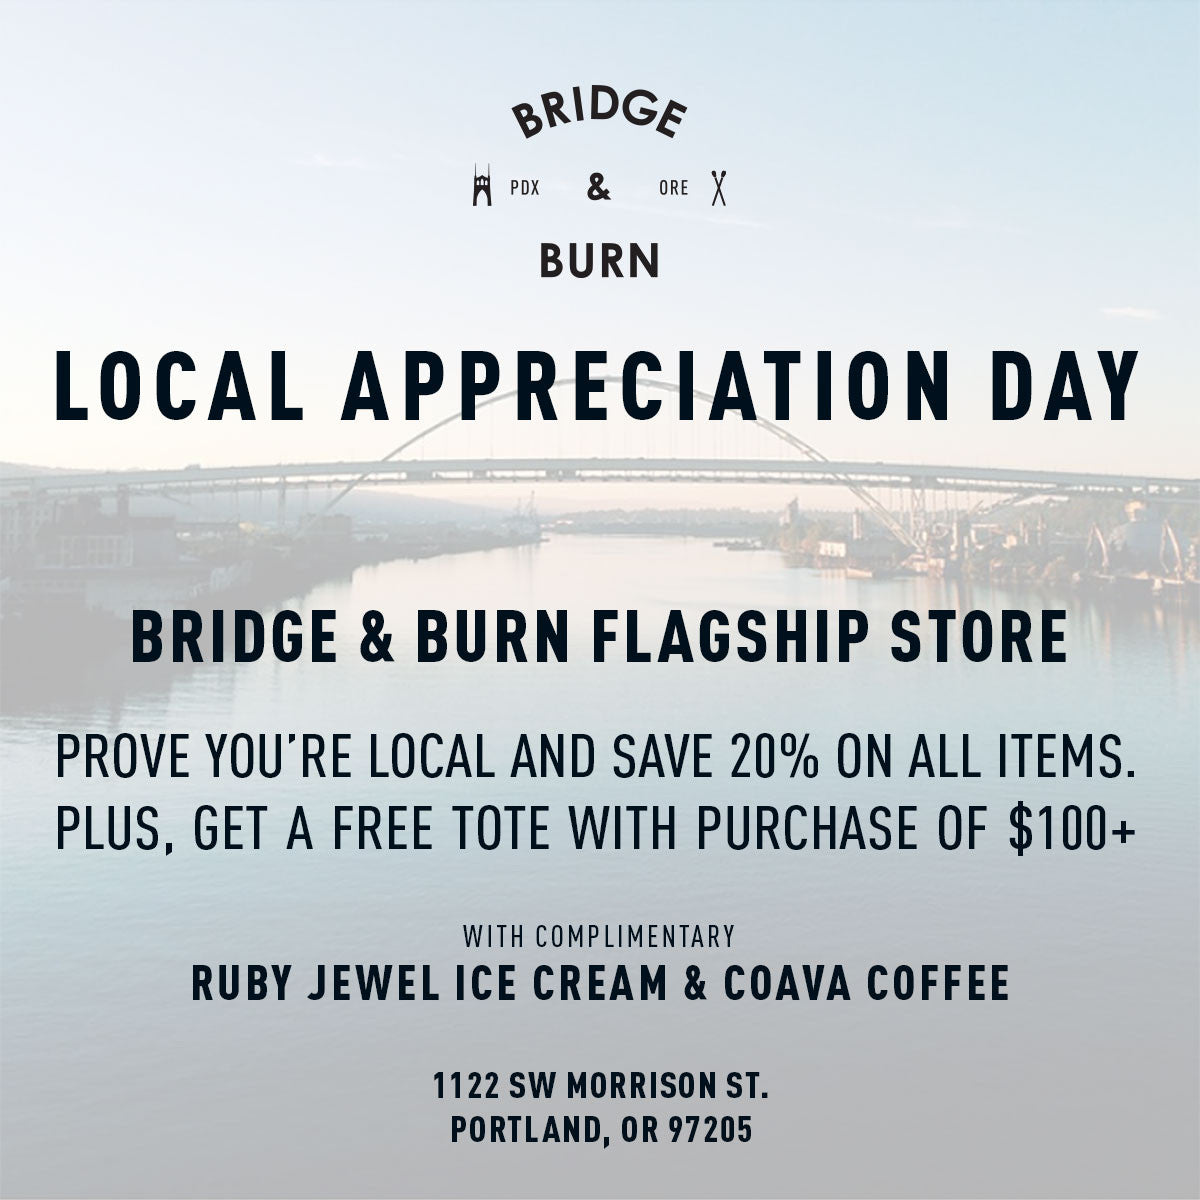 Portlanders Only! Bridge & Burn is throwing a Local Appreciation Day May 20th